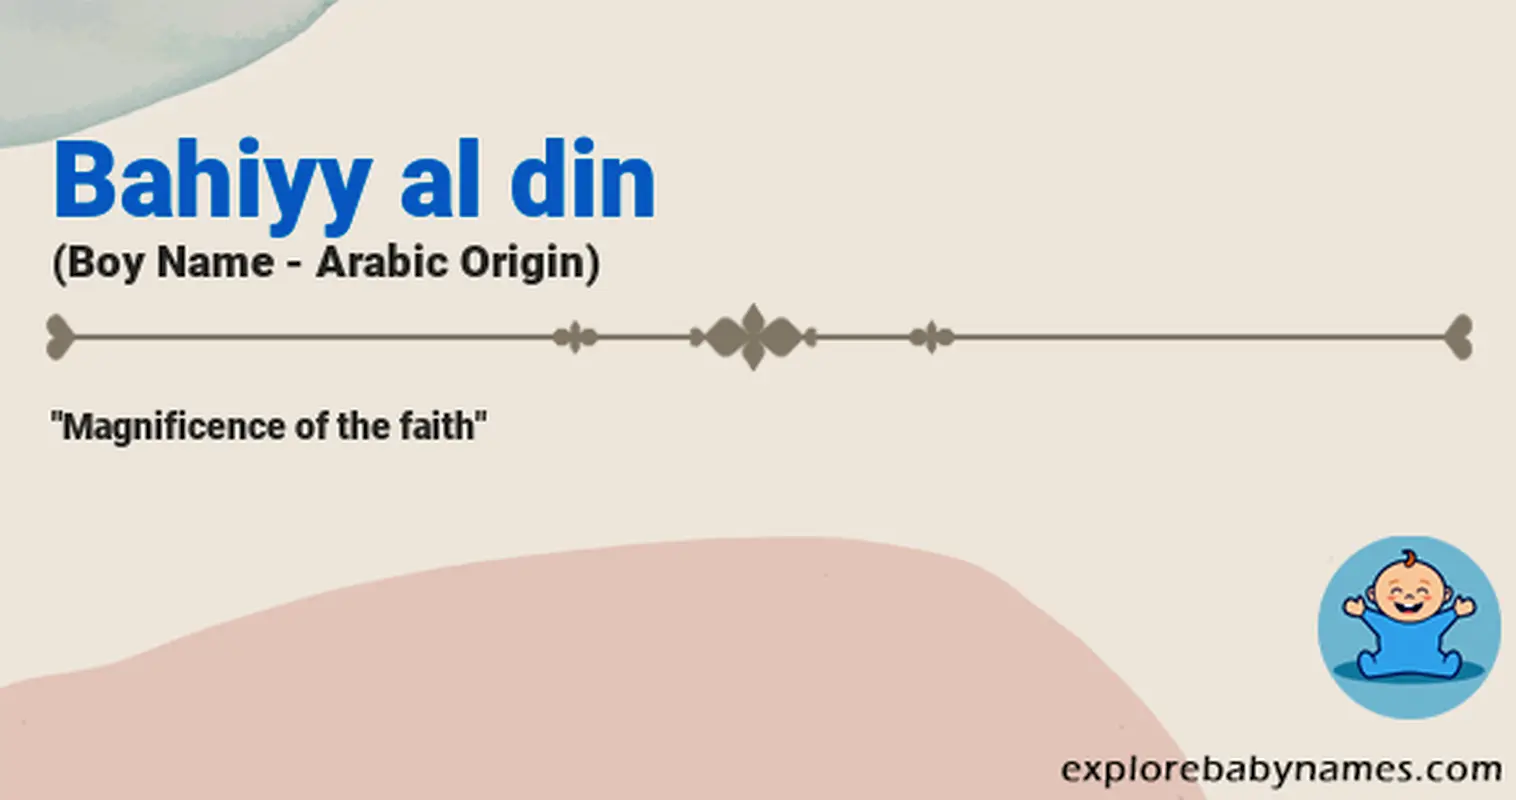 Meaning of Bahiyy al din